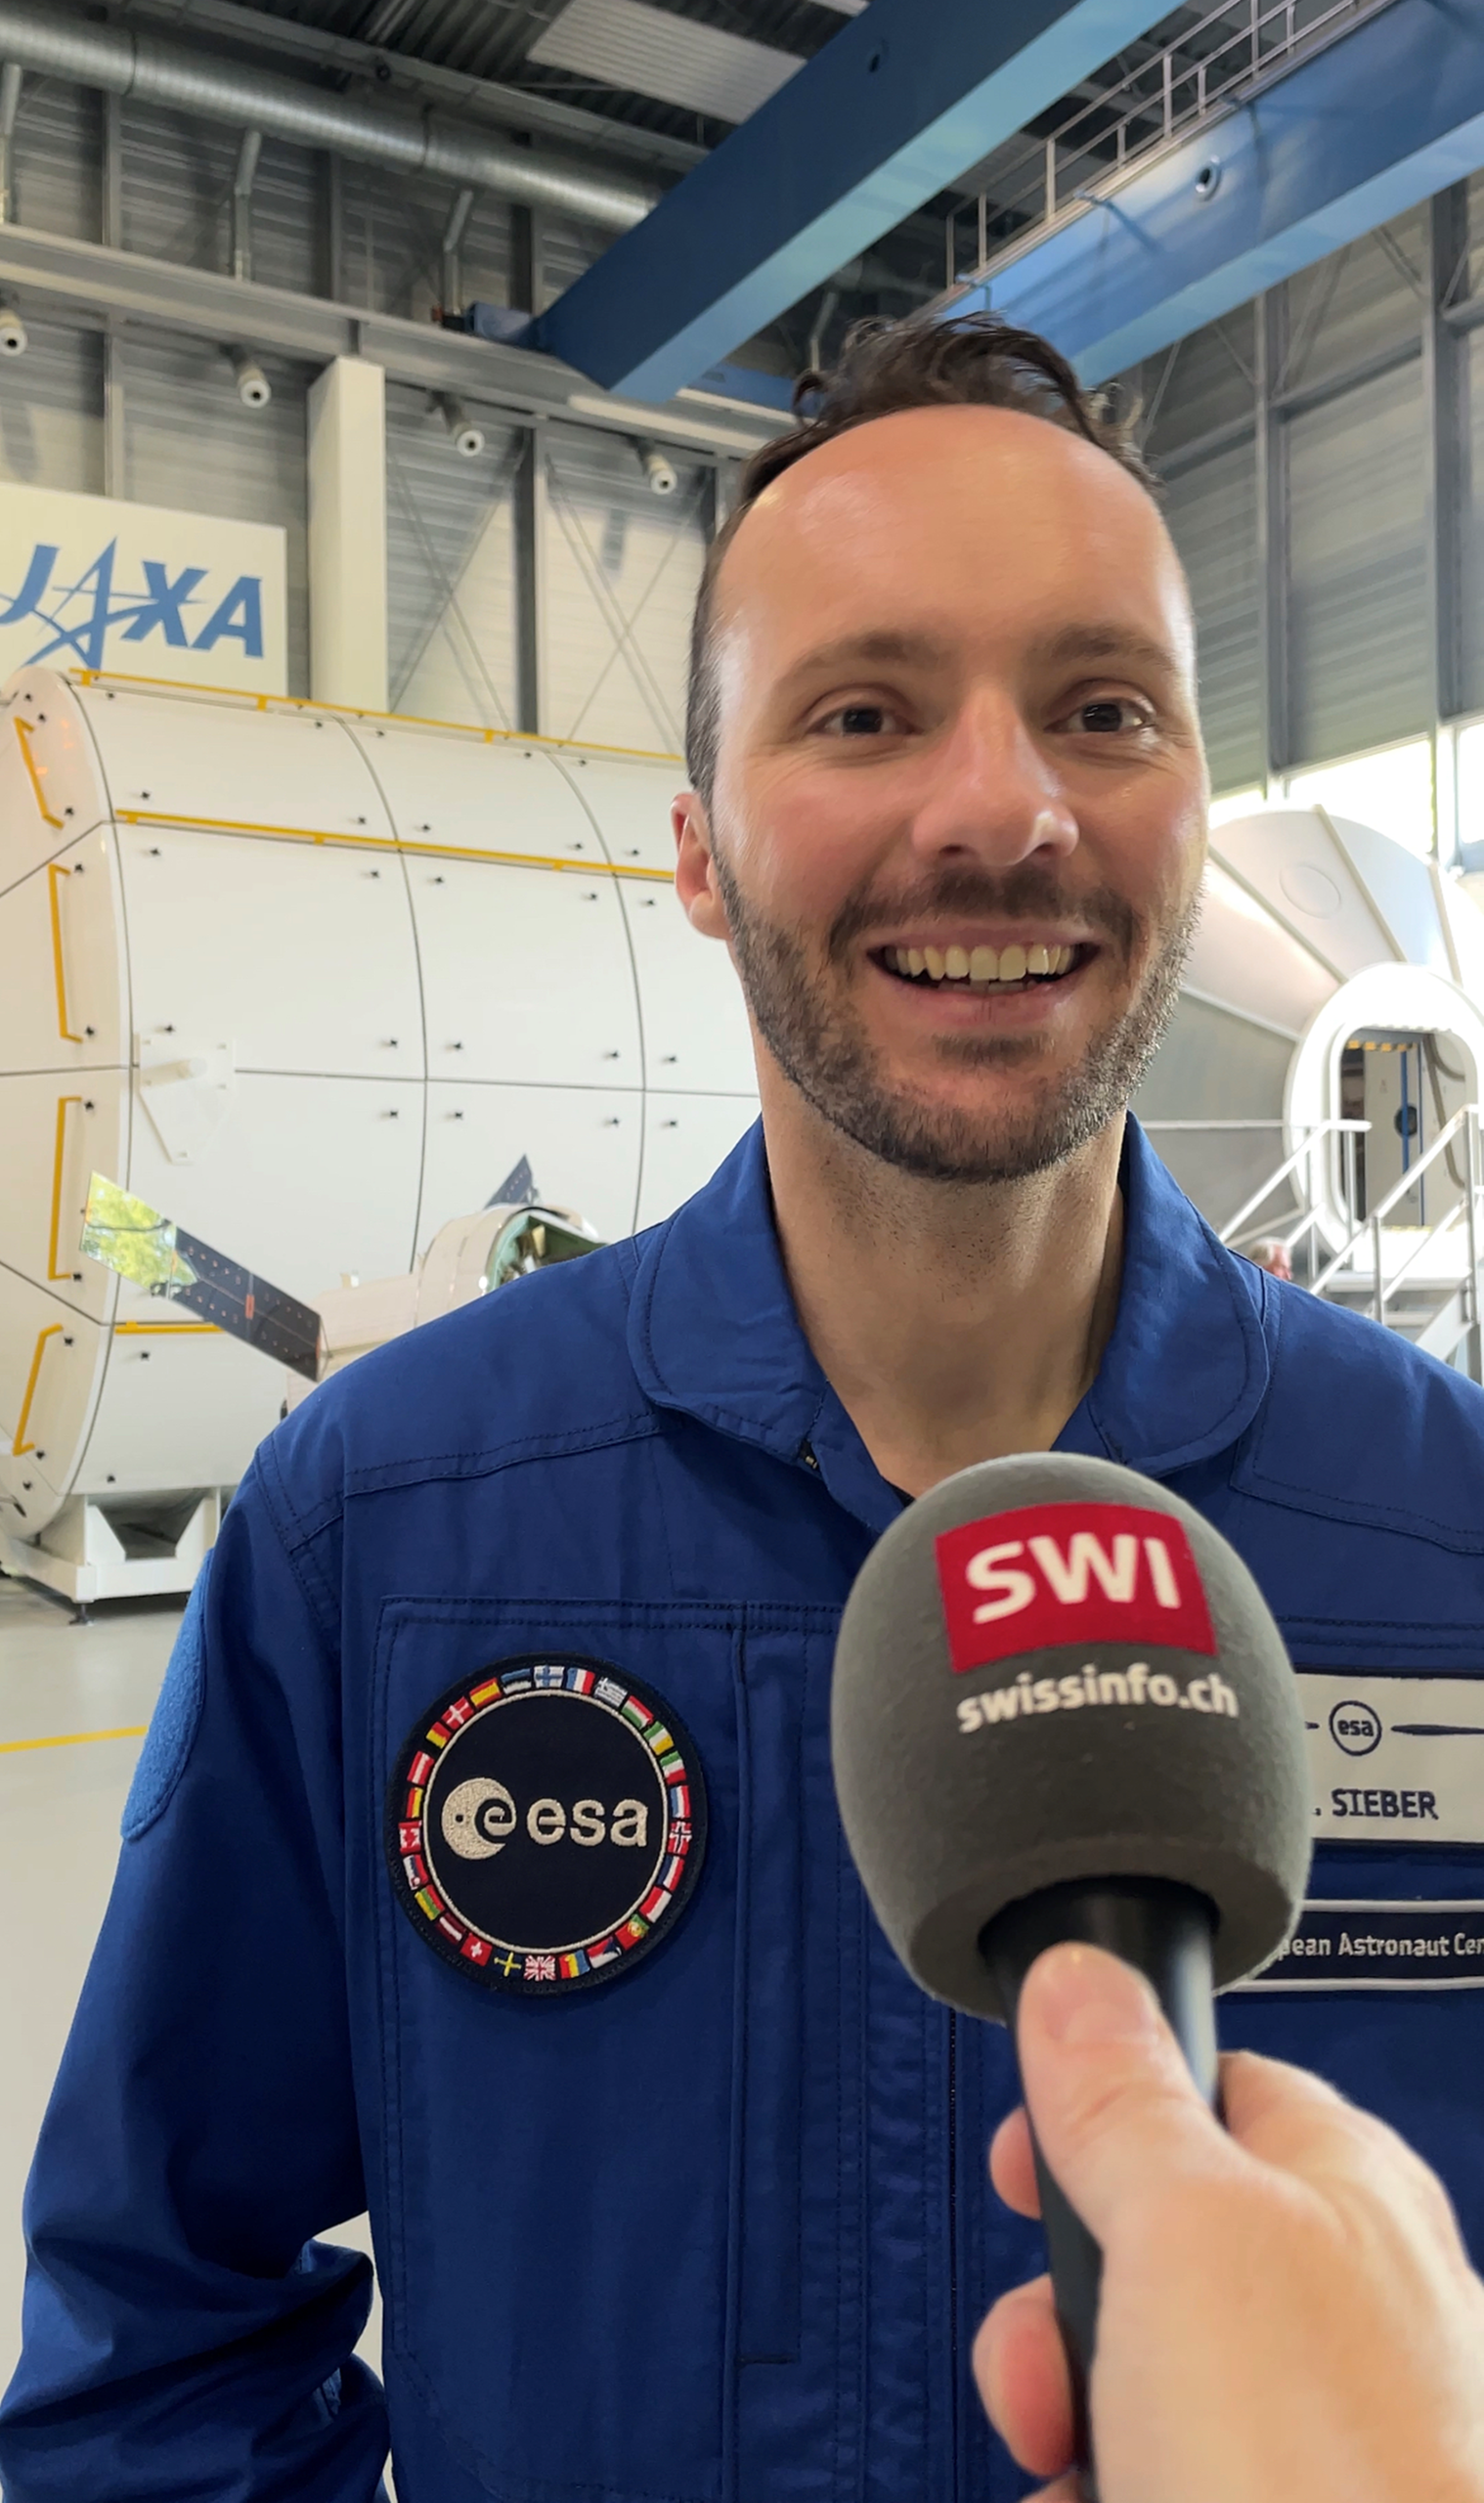 Marco Sieber Swiss ESA astronaut